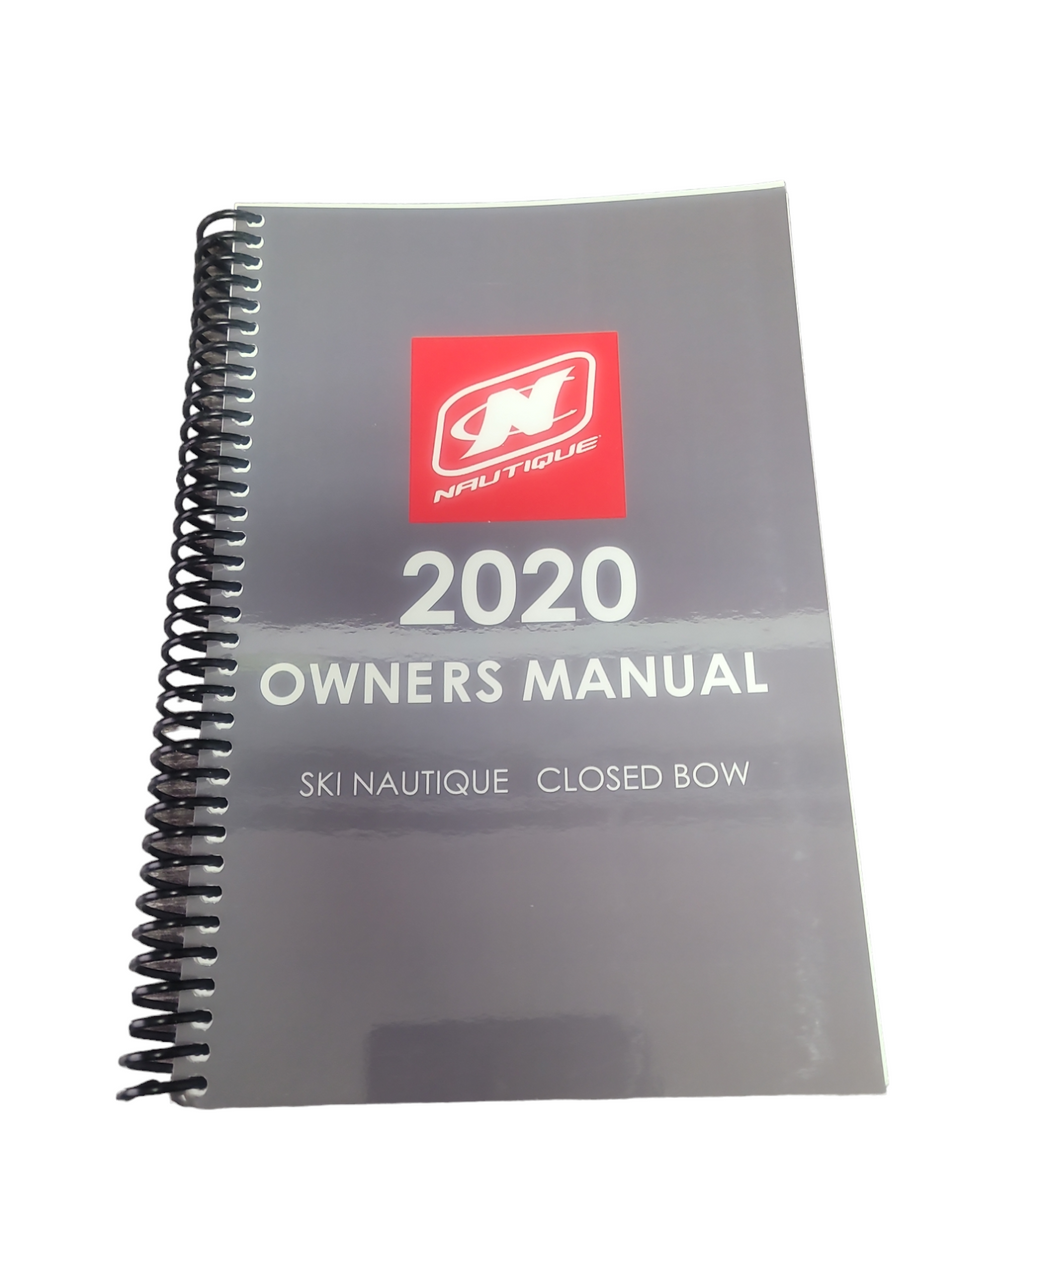 OWNERS MANUAL- 2020 SKI NAUTIQUE CLOSED BOW